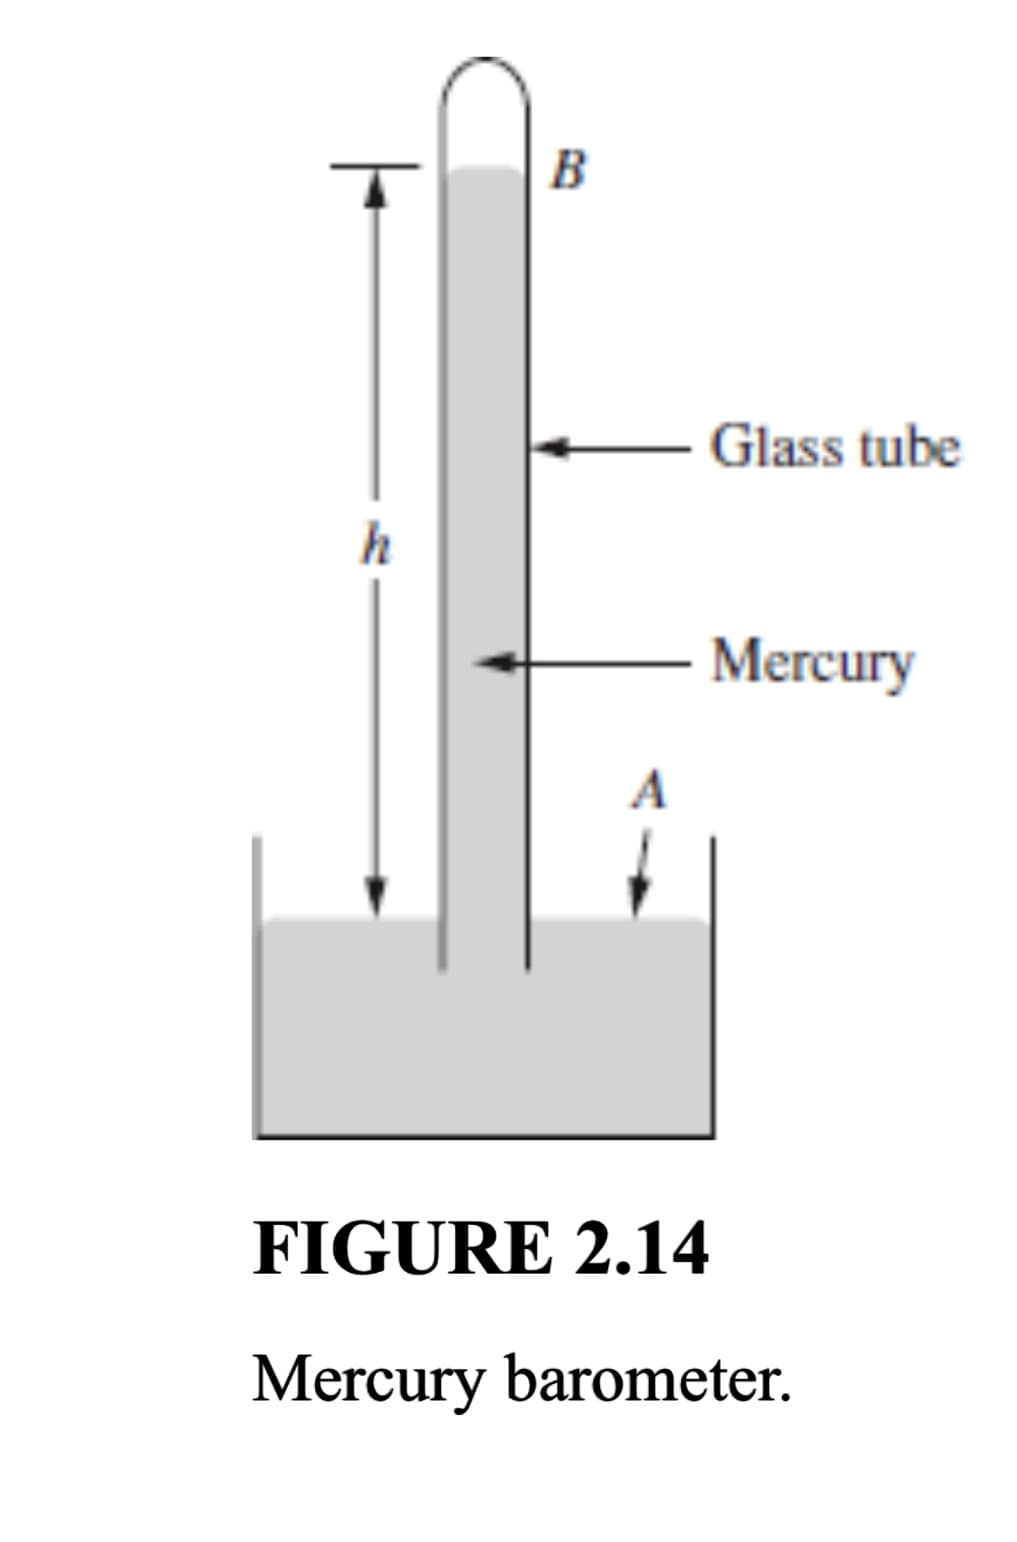 h
B
A
Glass tube
Mercury
FIGURE 2.14
Mercury barometer.